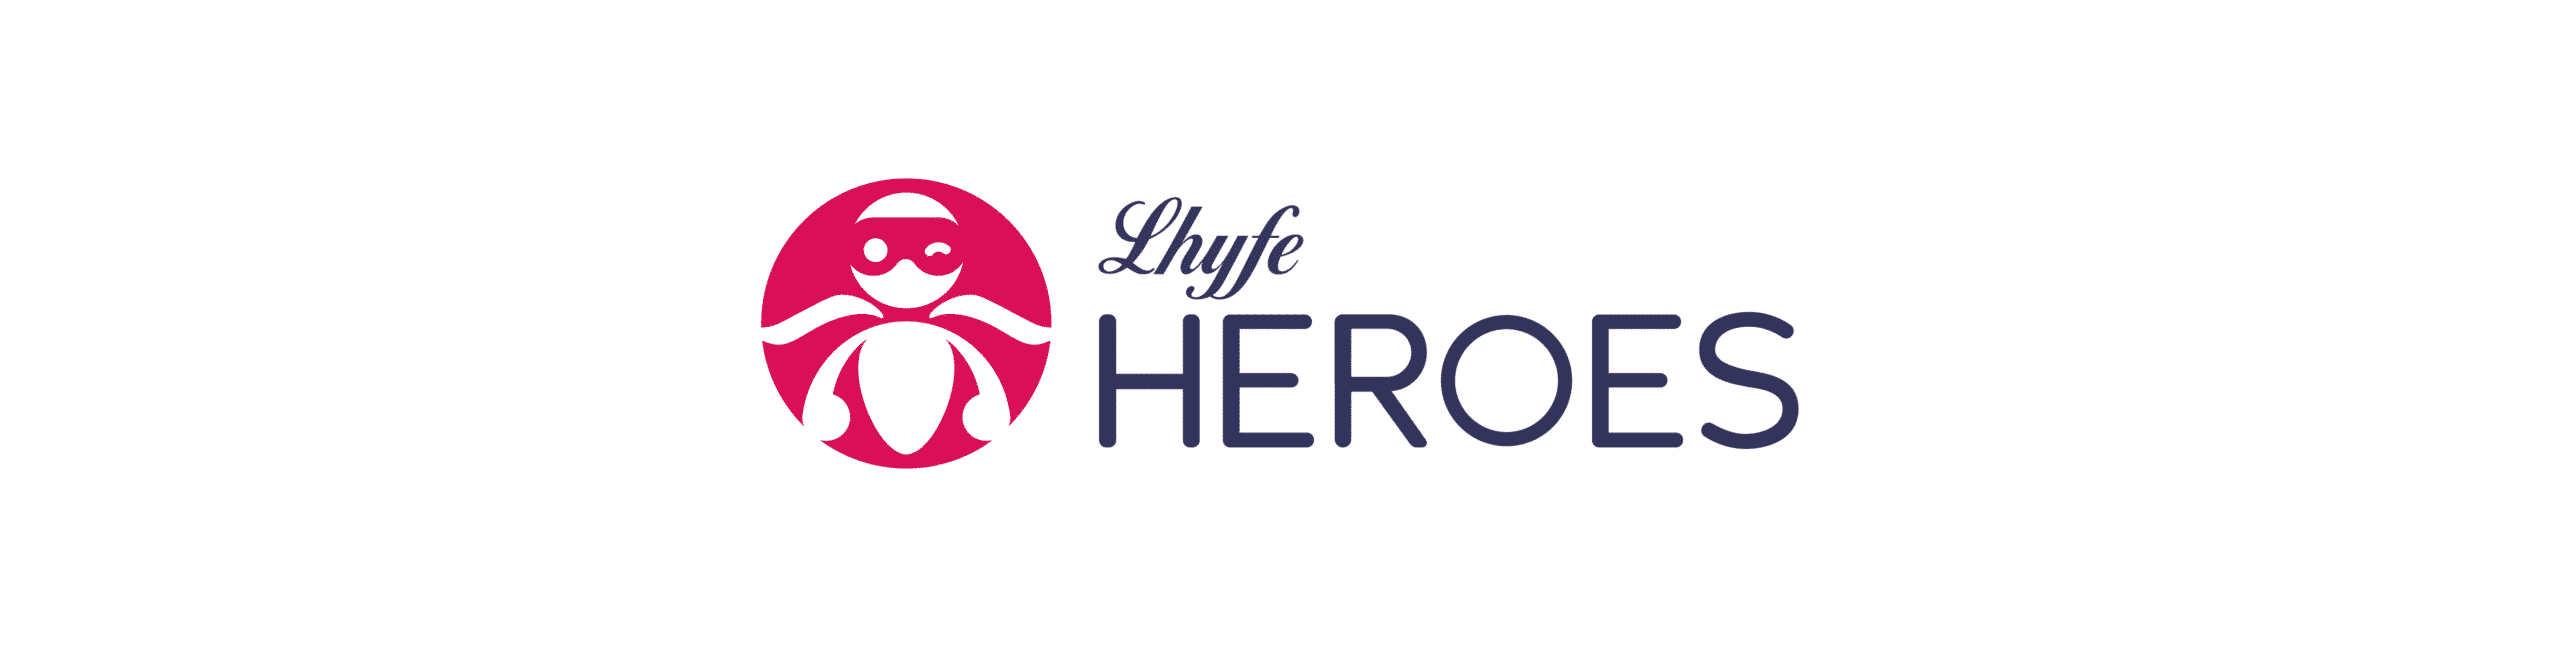 Lhyfe Heroes logo